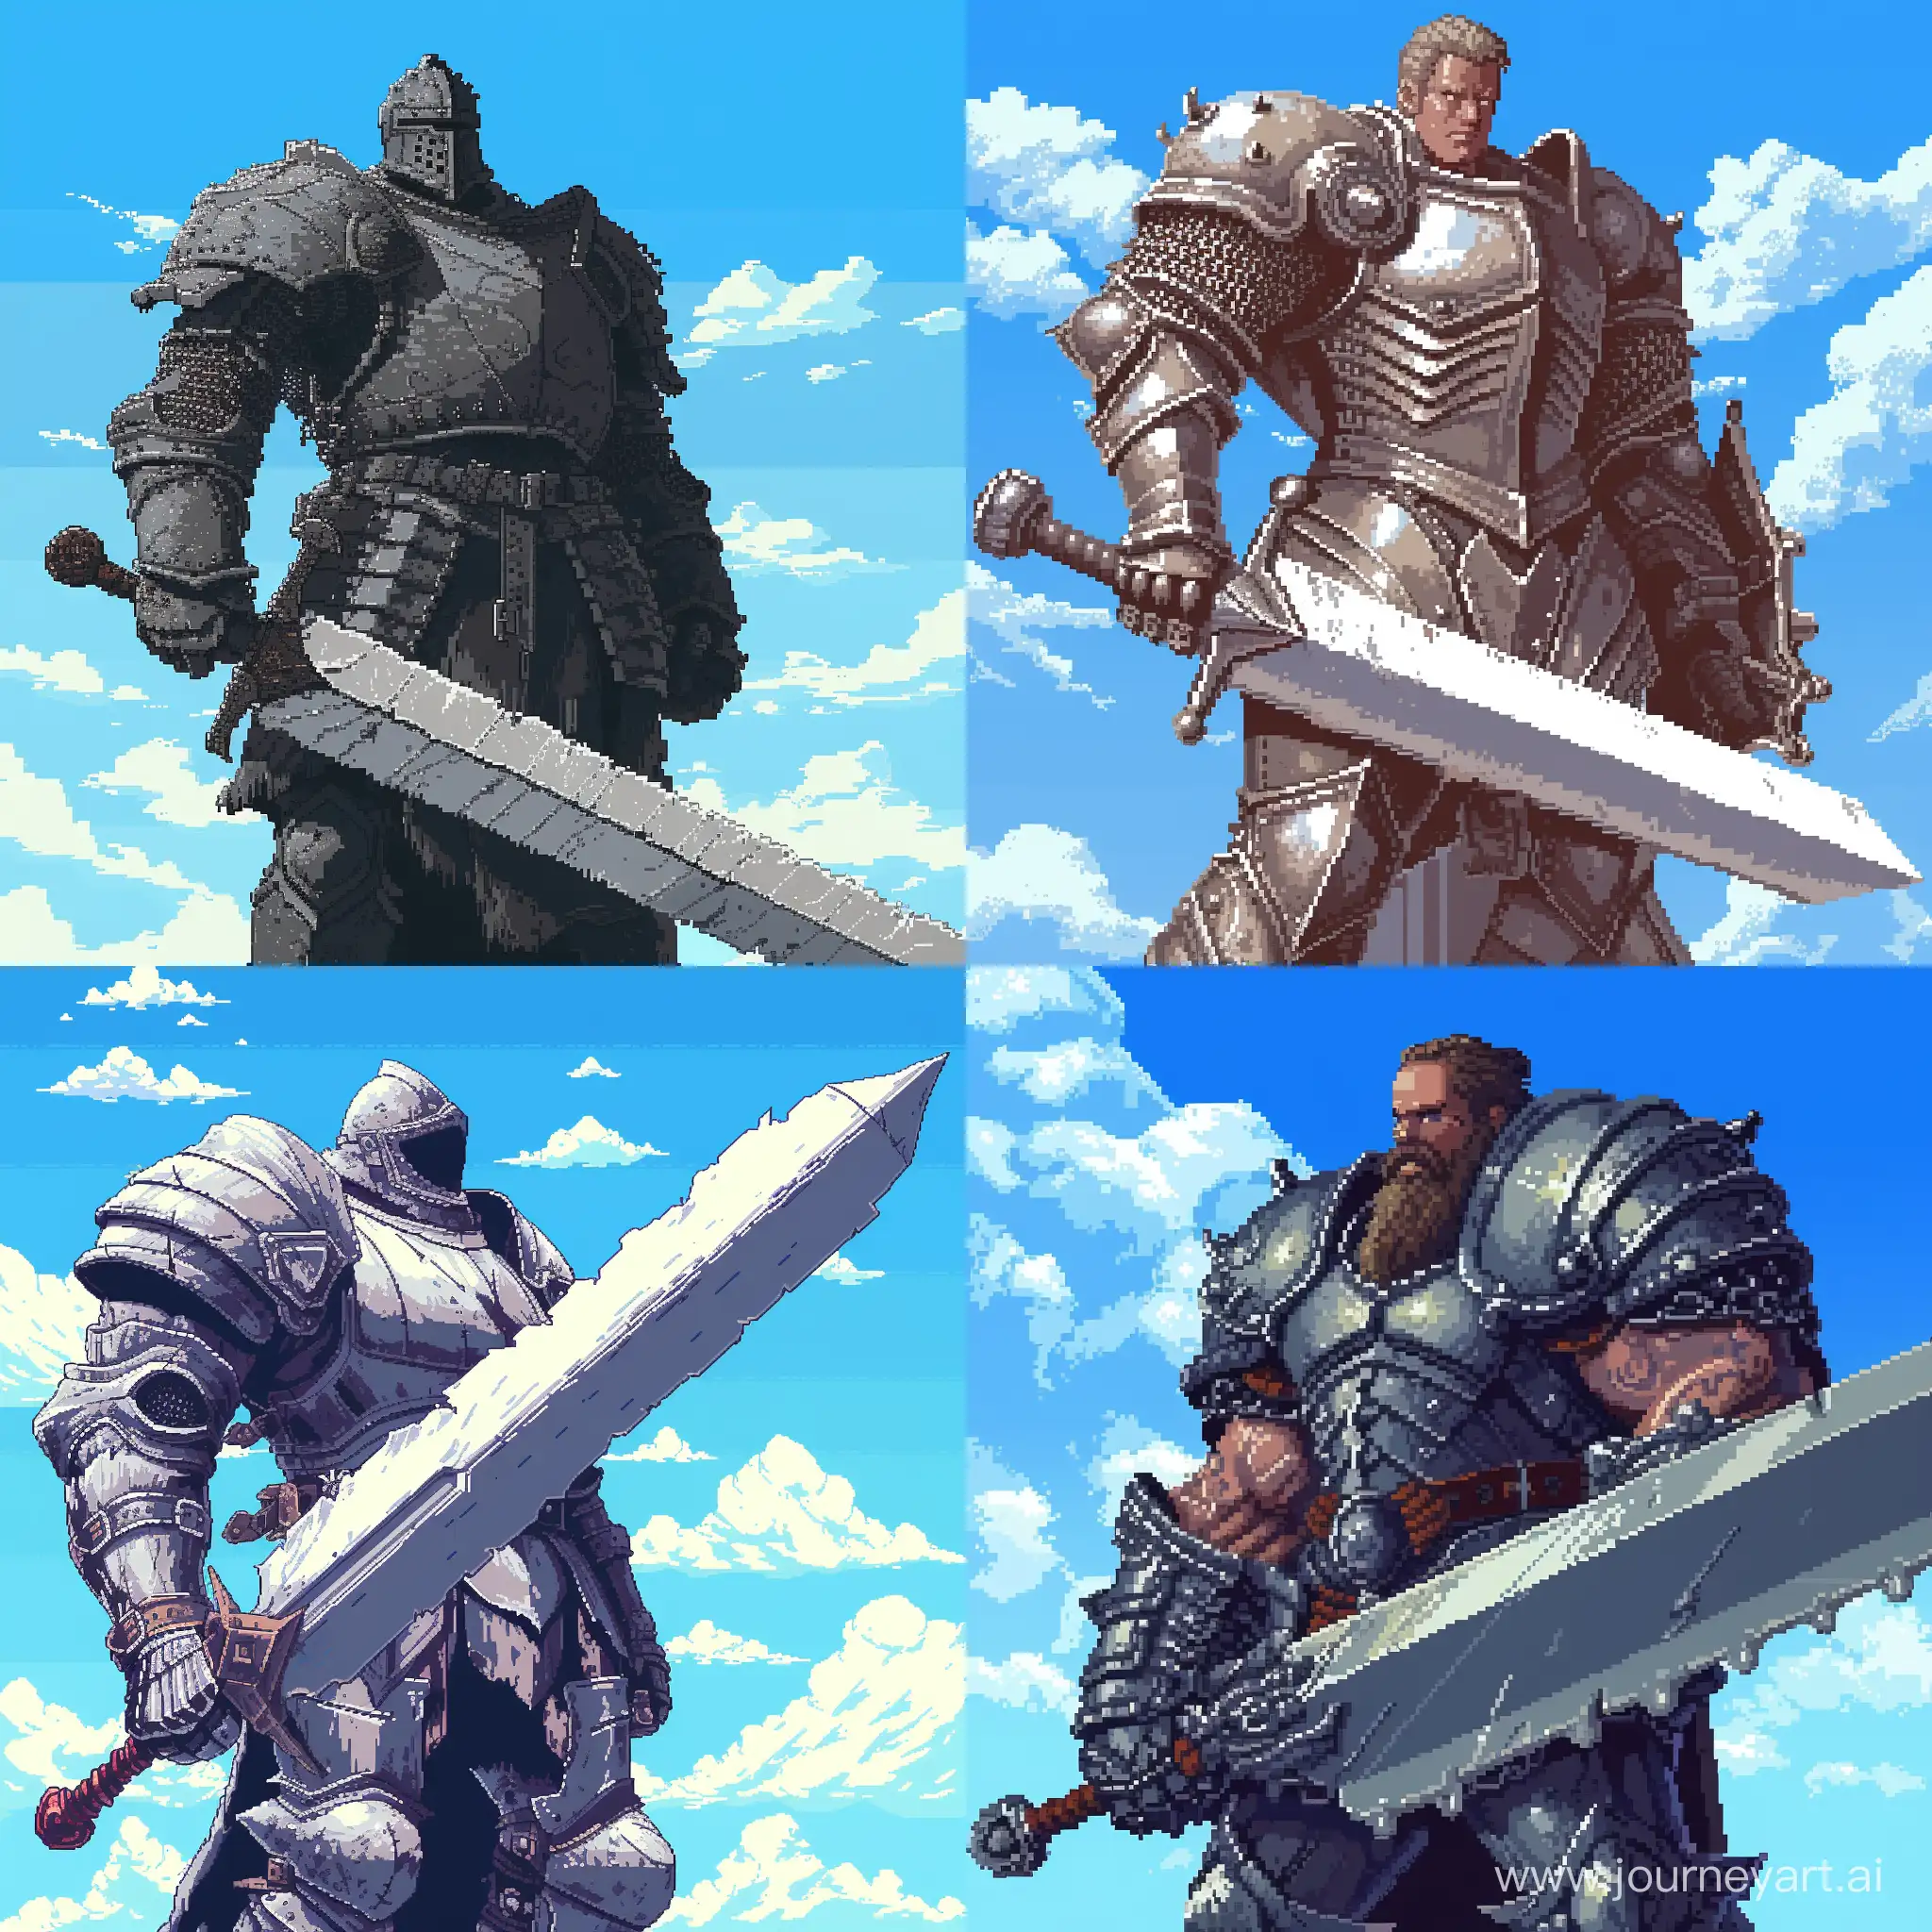 Grim-Knight-in-Pixel-Art-Mighty-Warrior-with-Sword-under-Blue-Sky